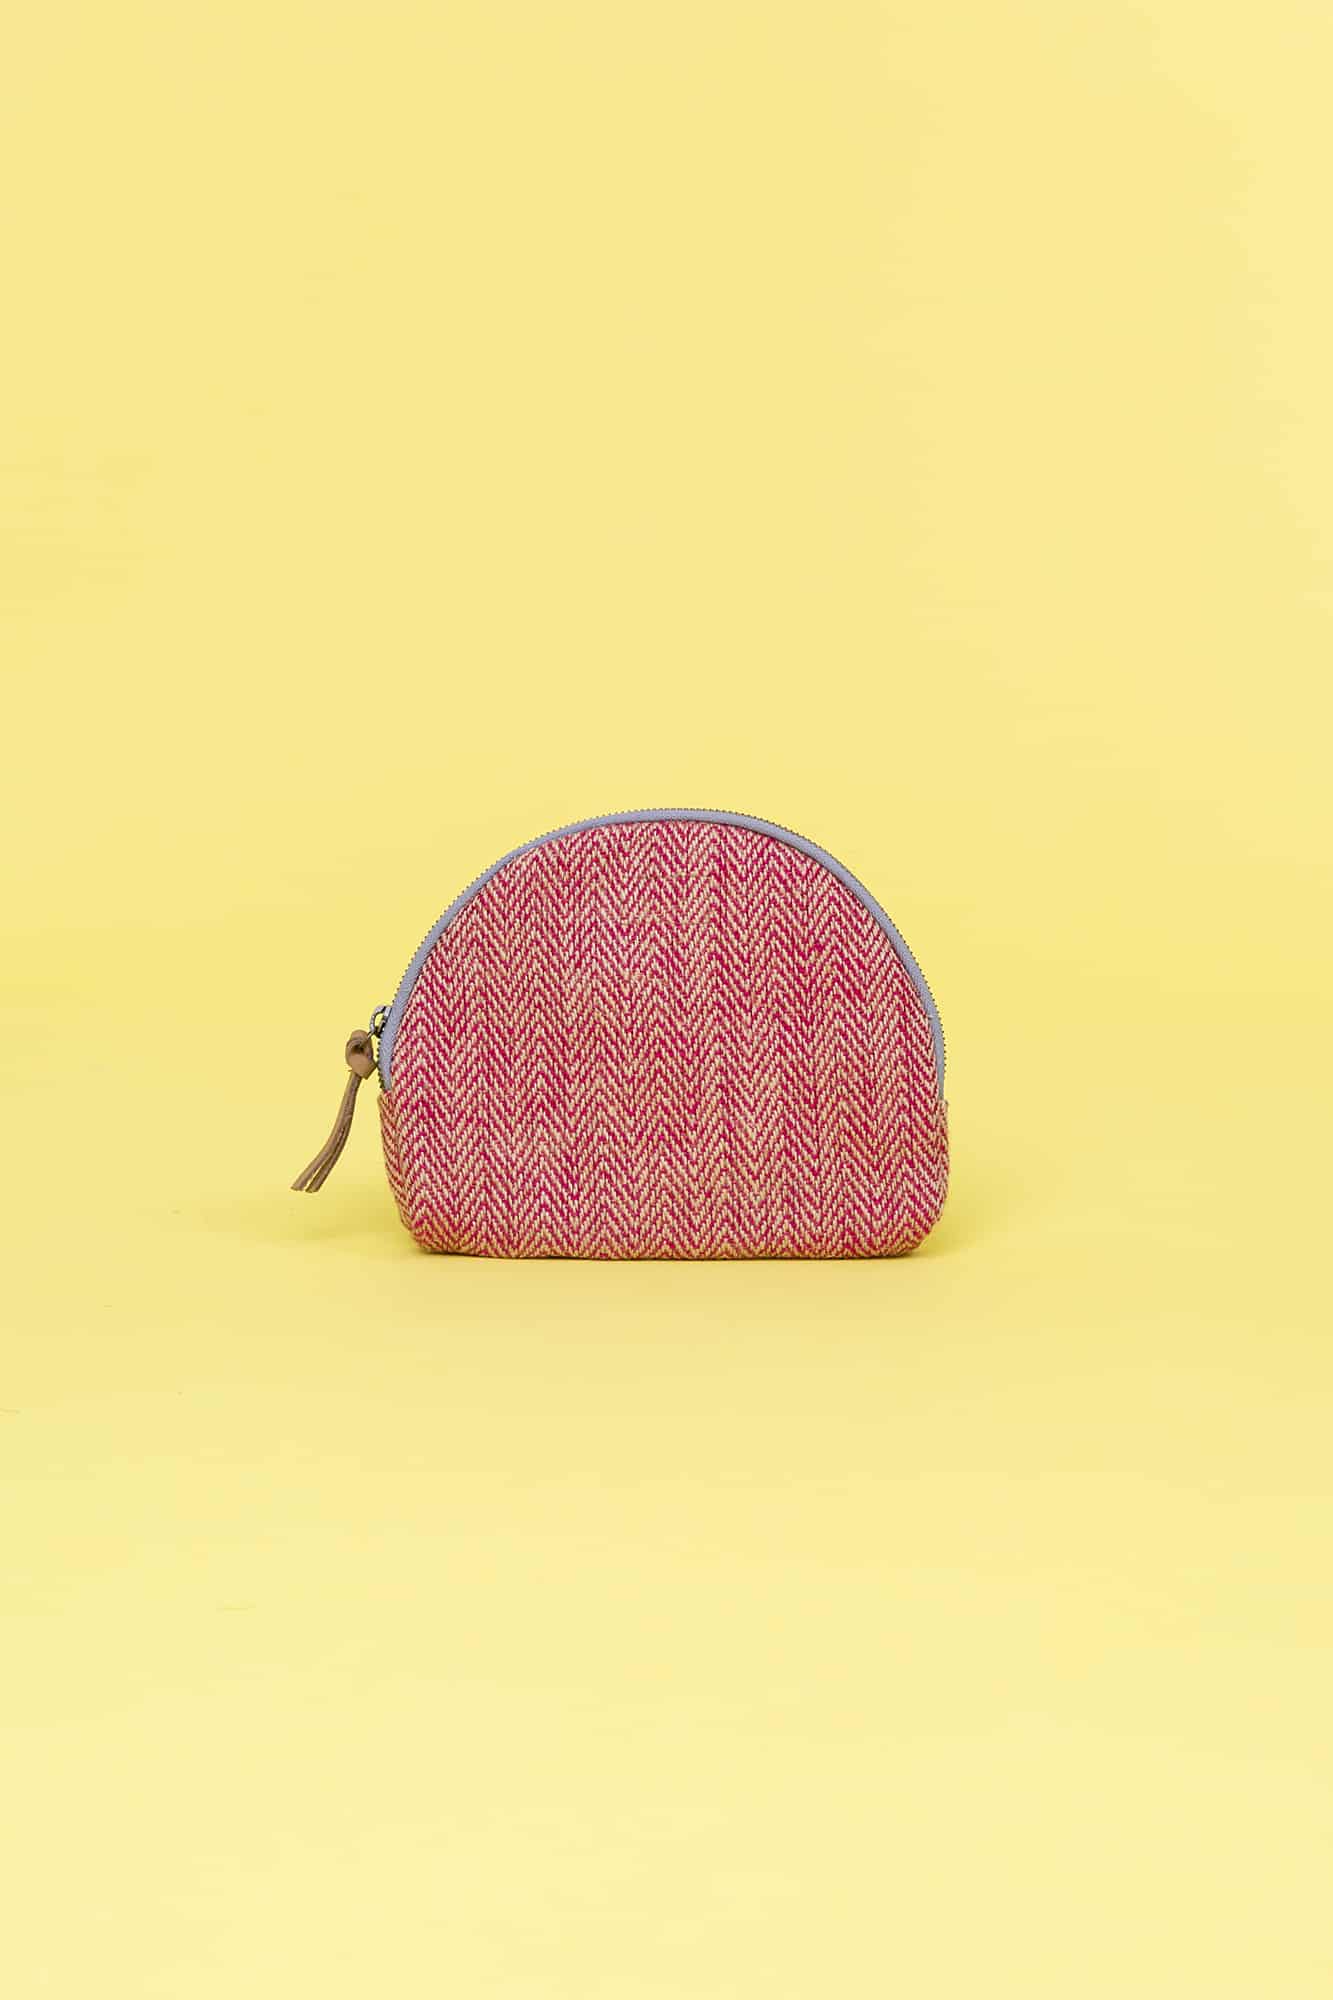 Stylish Minimalist Design Jute Bag (Red)